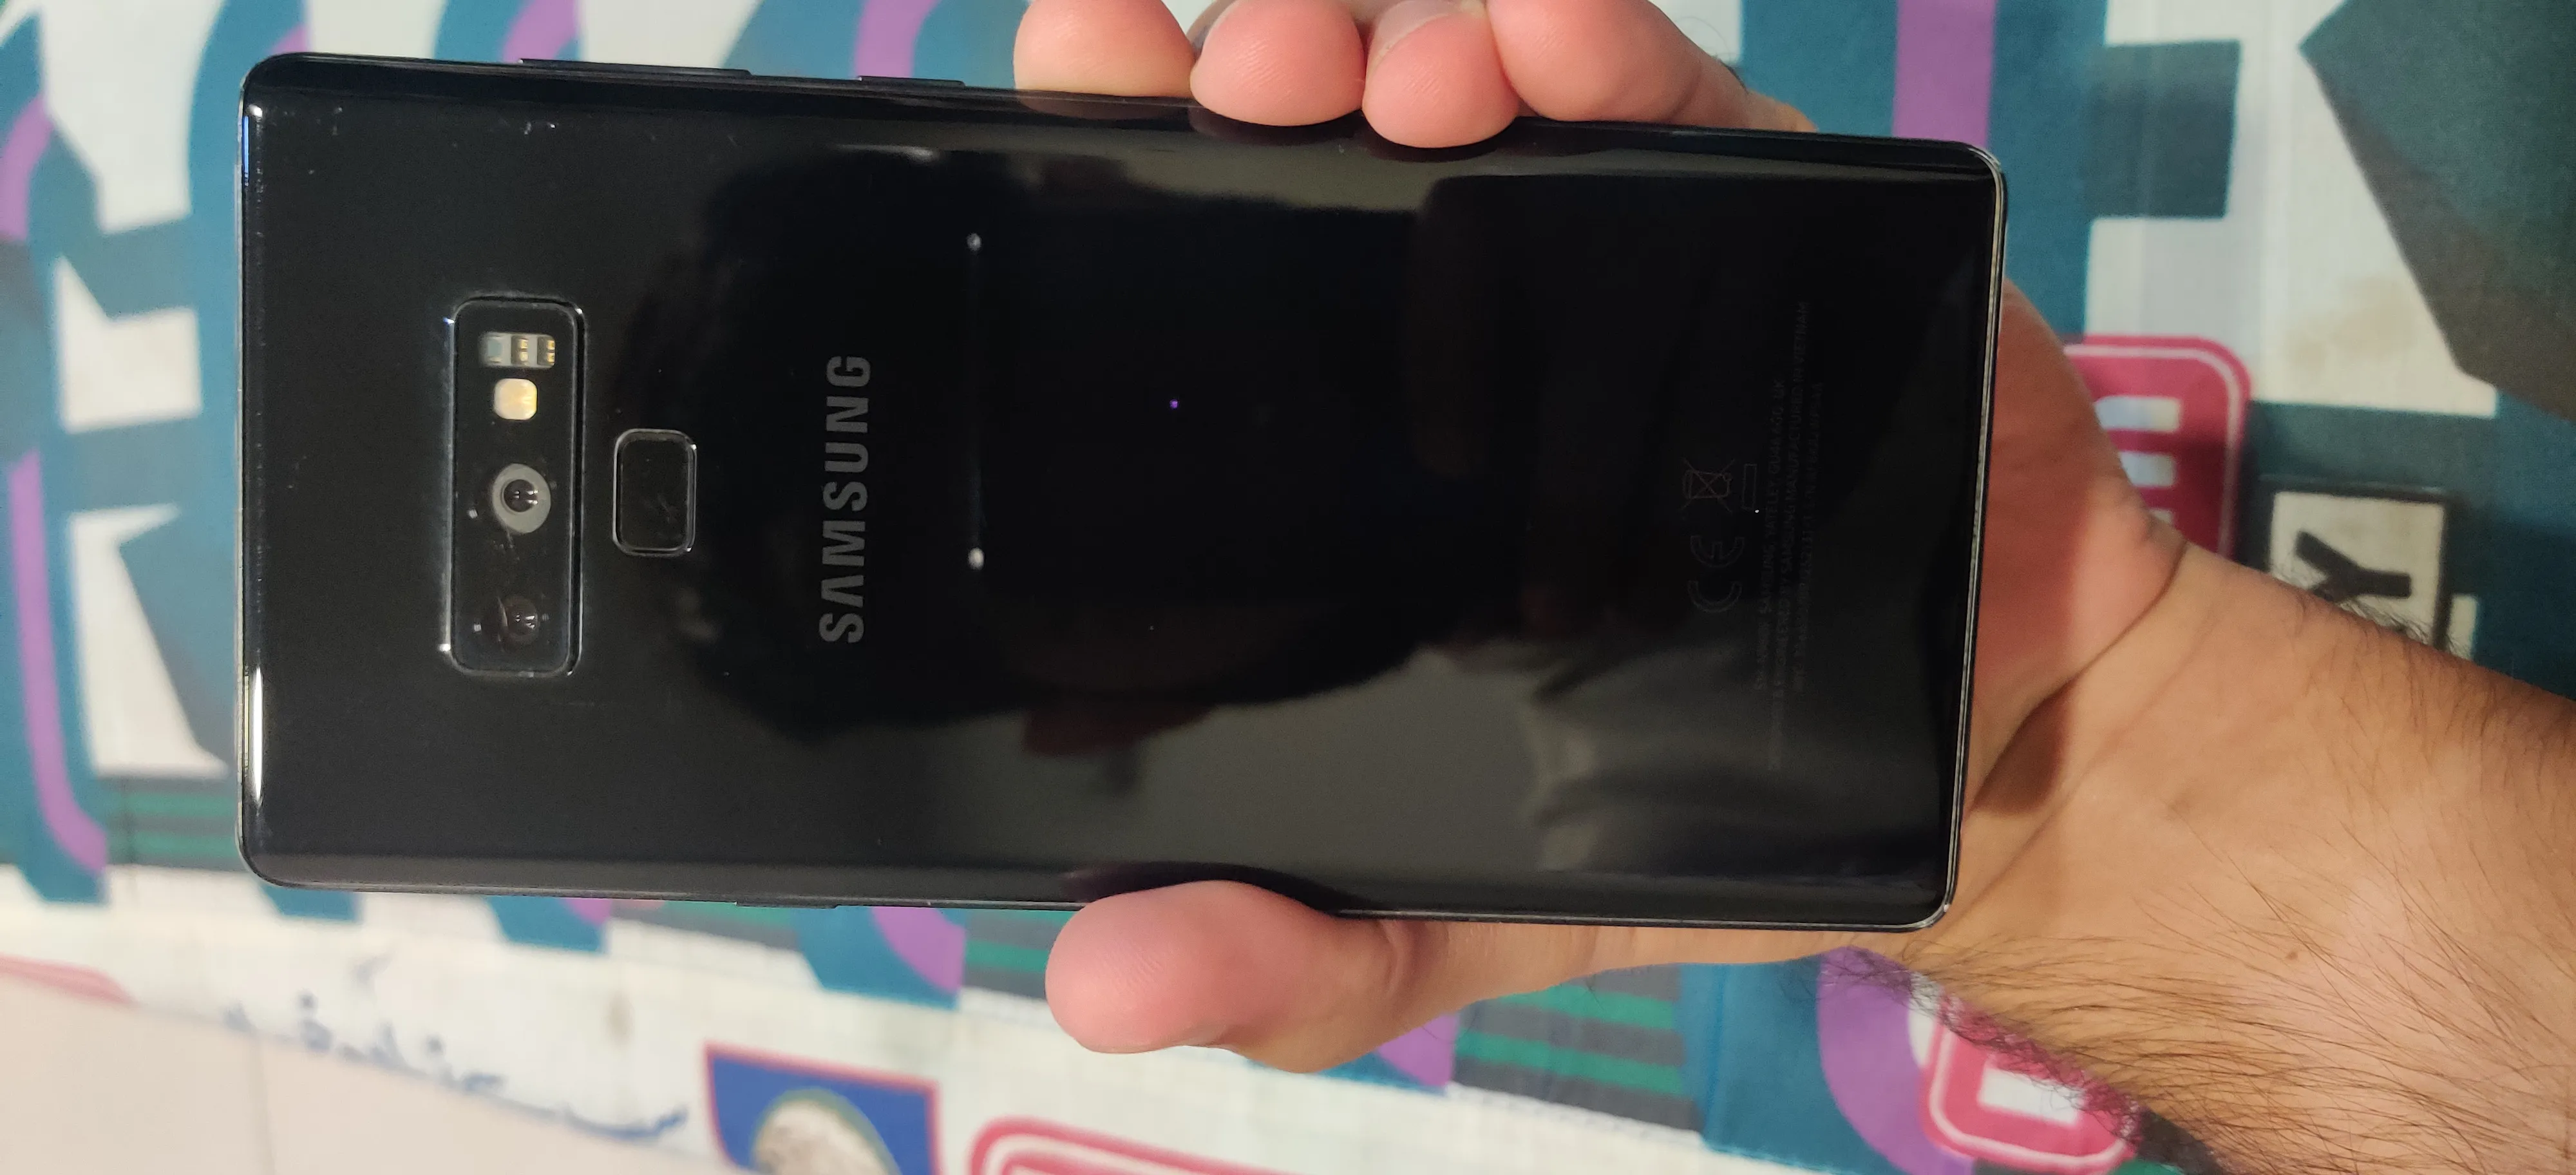 Samsung Galaxy Note 9 F model - photo 3